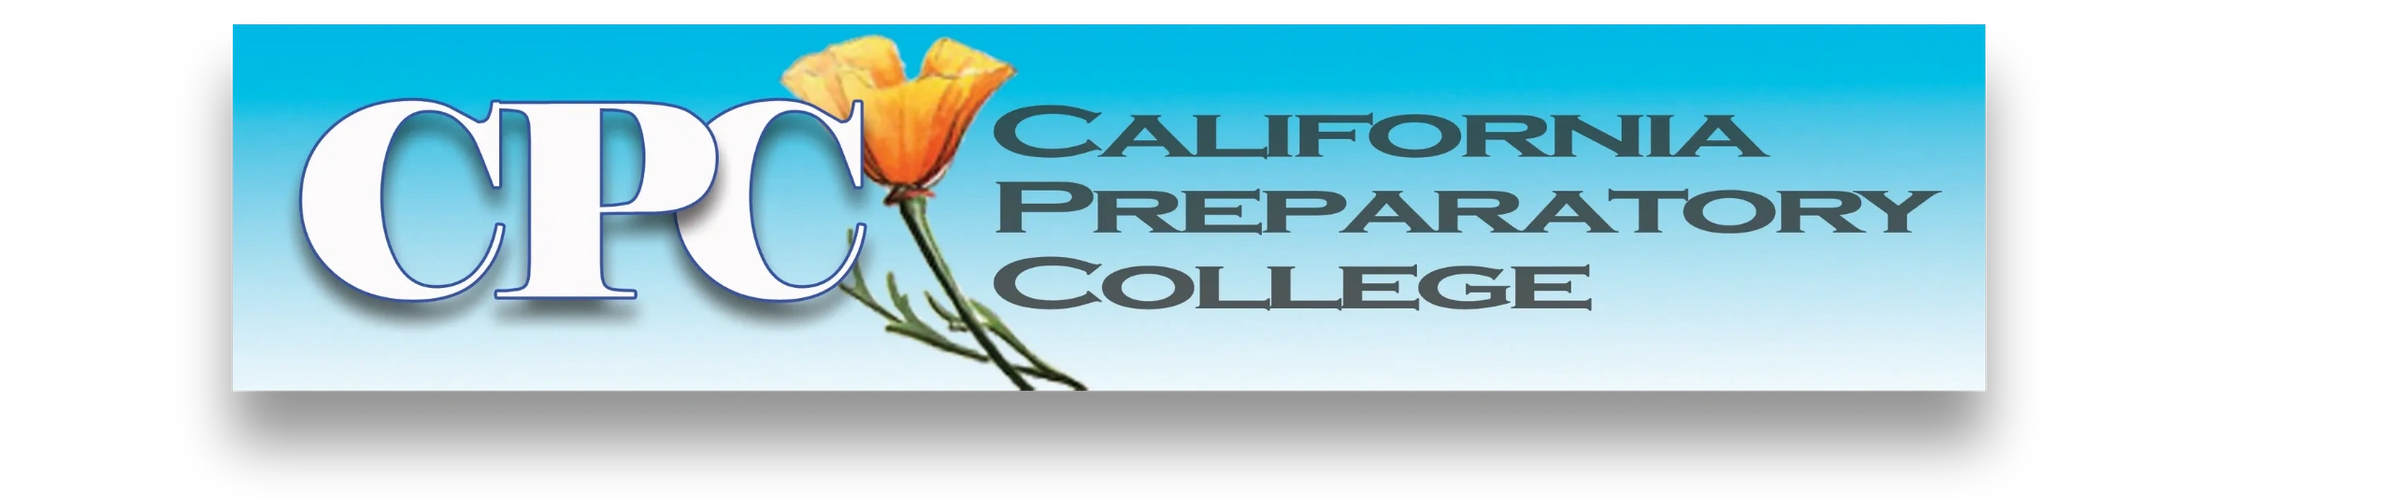 Header Logo California Preparatory College